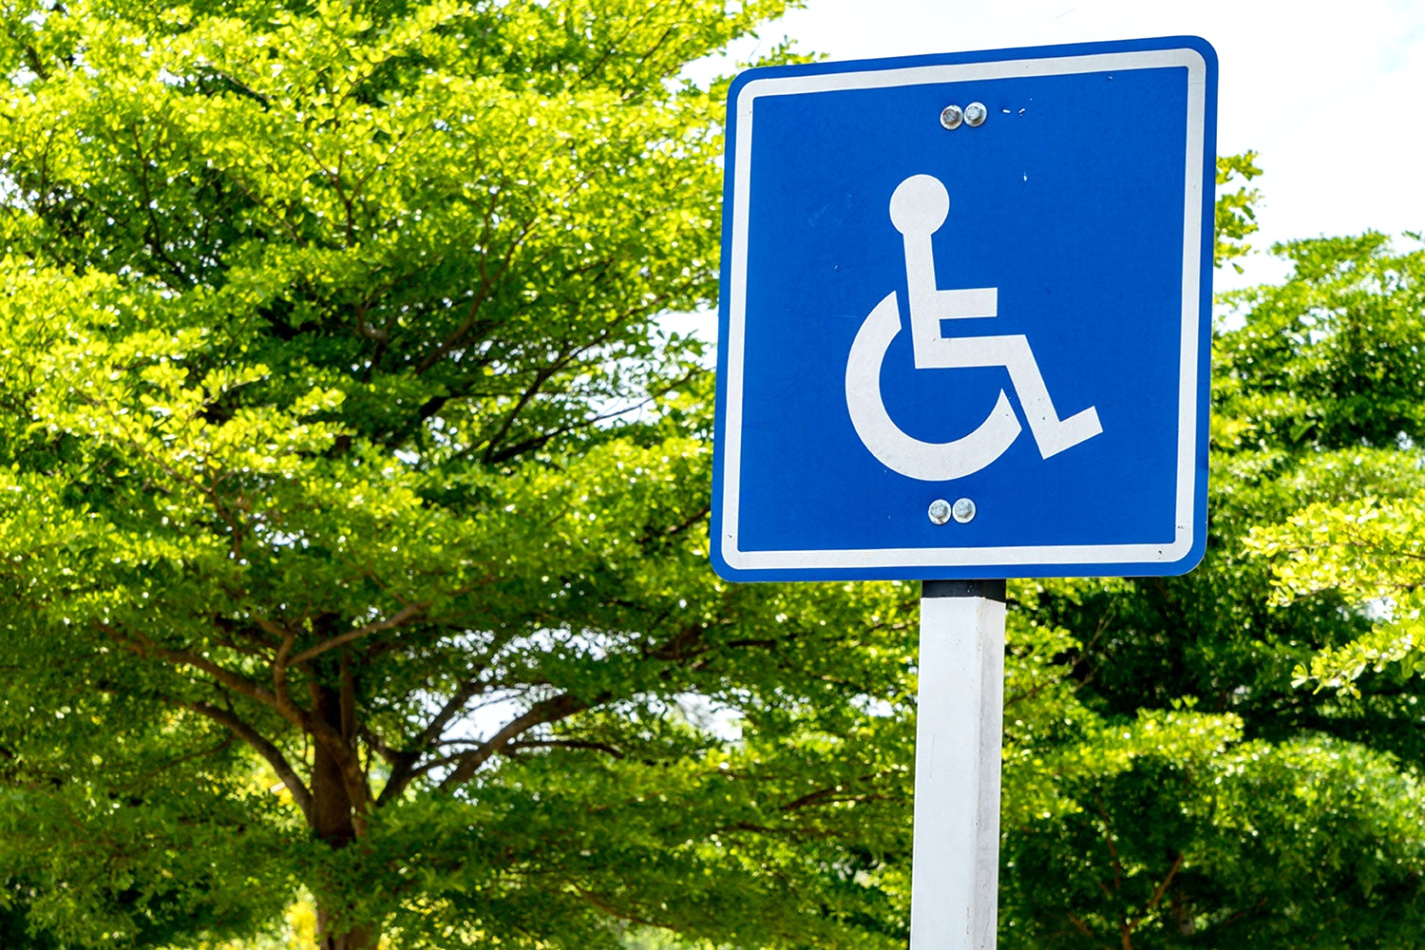 disability discrimination